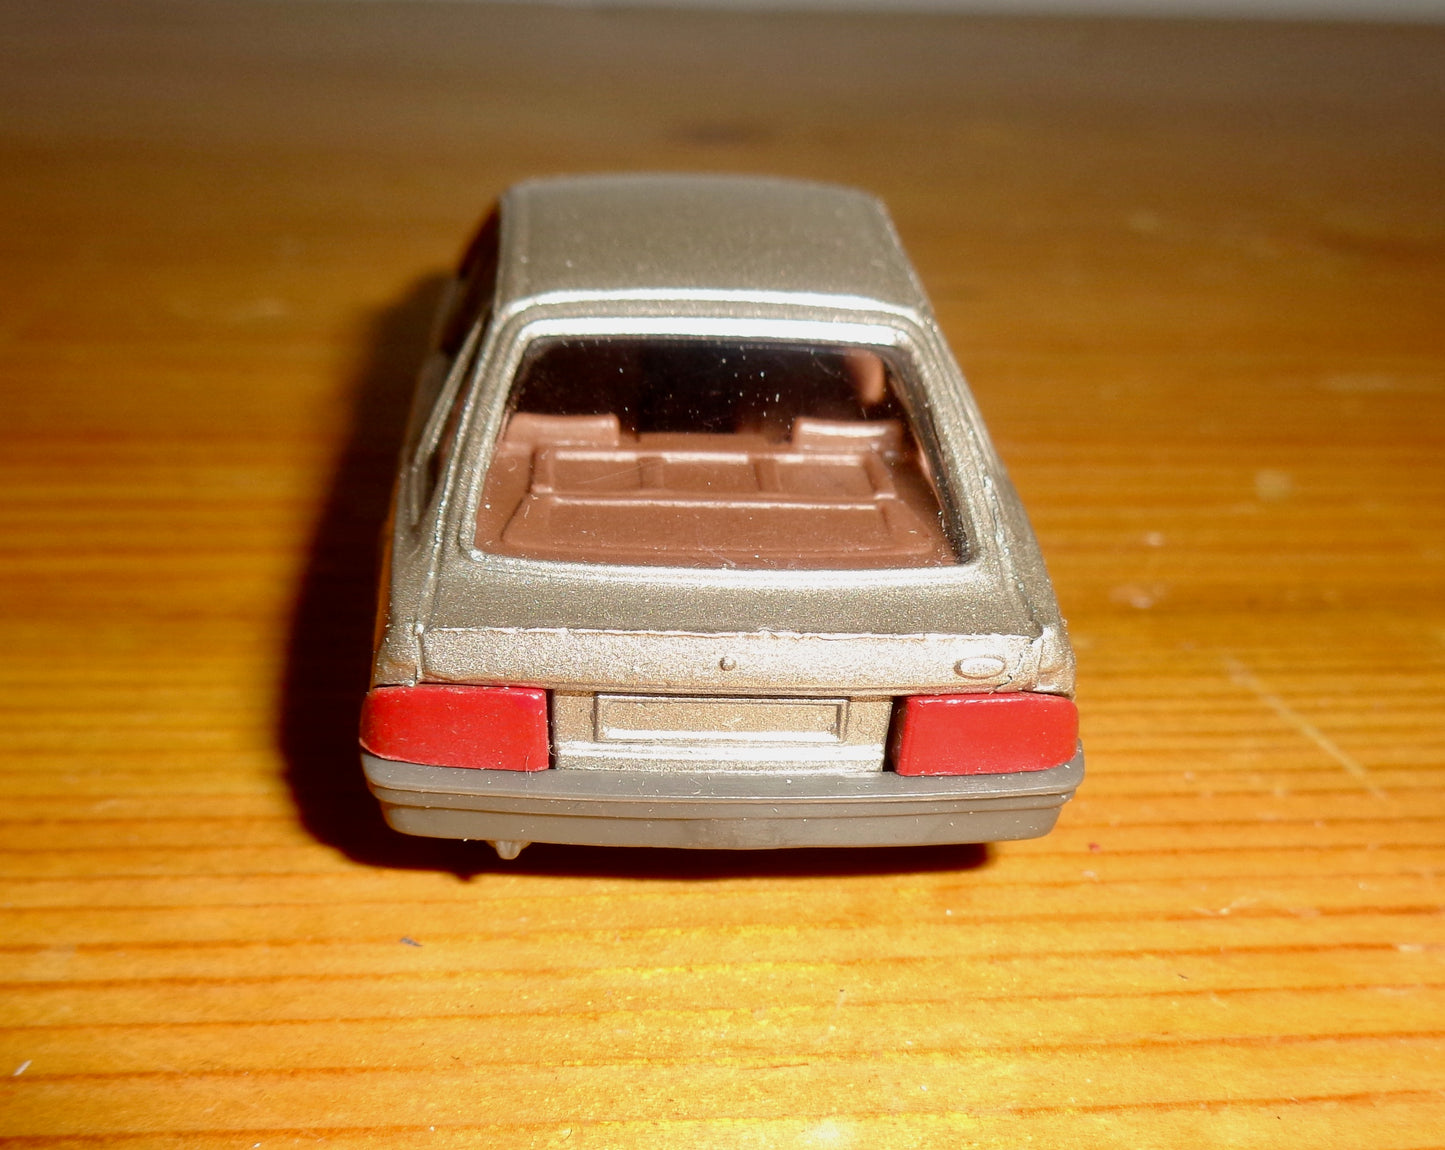 1980s Corgi Toys Ford Sierra 2.3 Ghia In Its Original Box